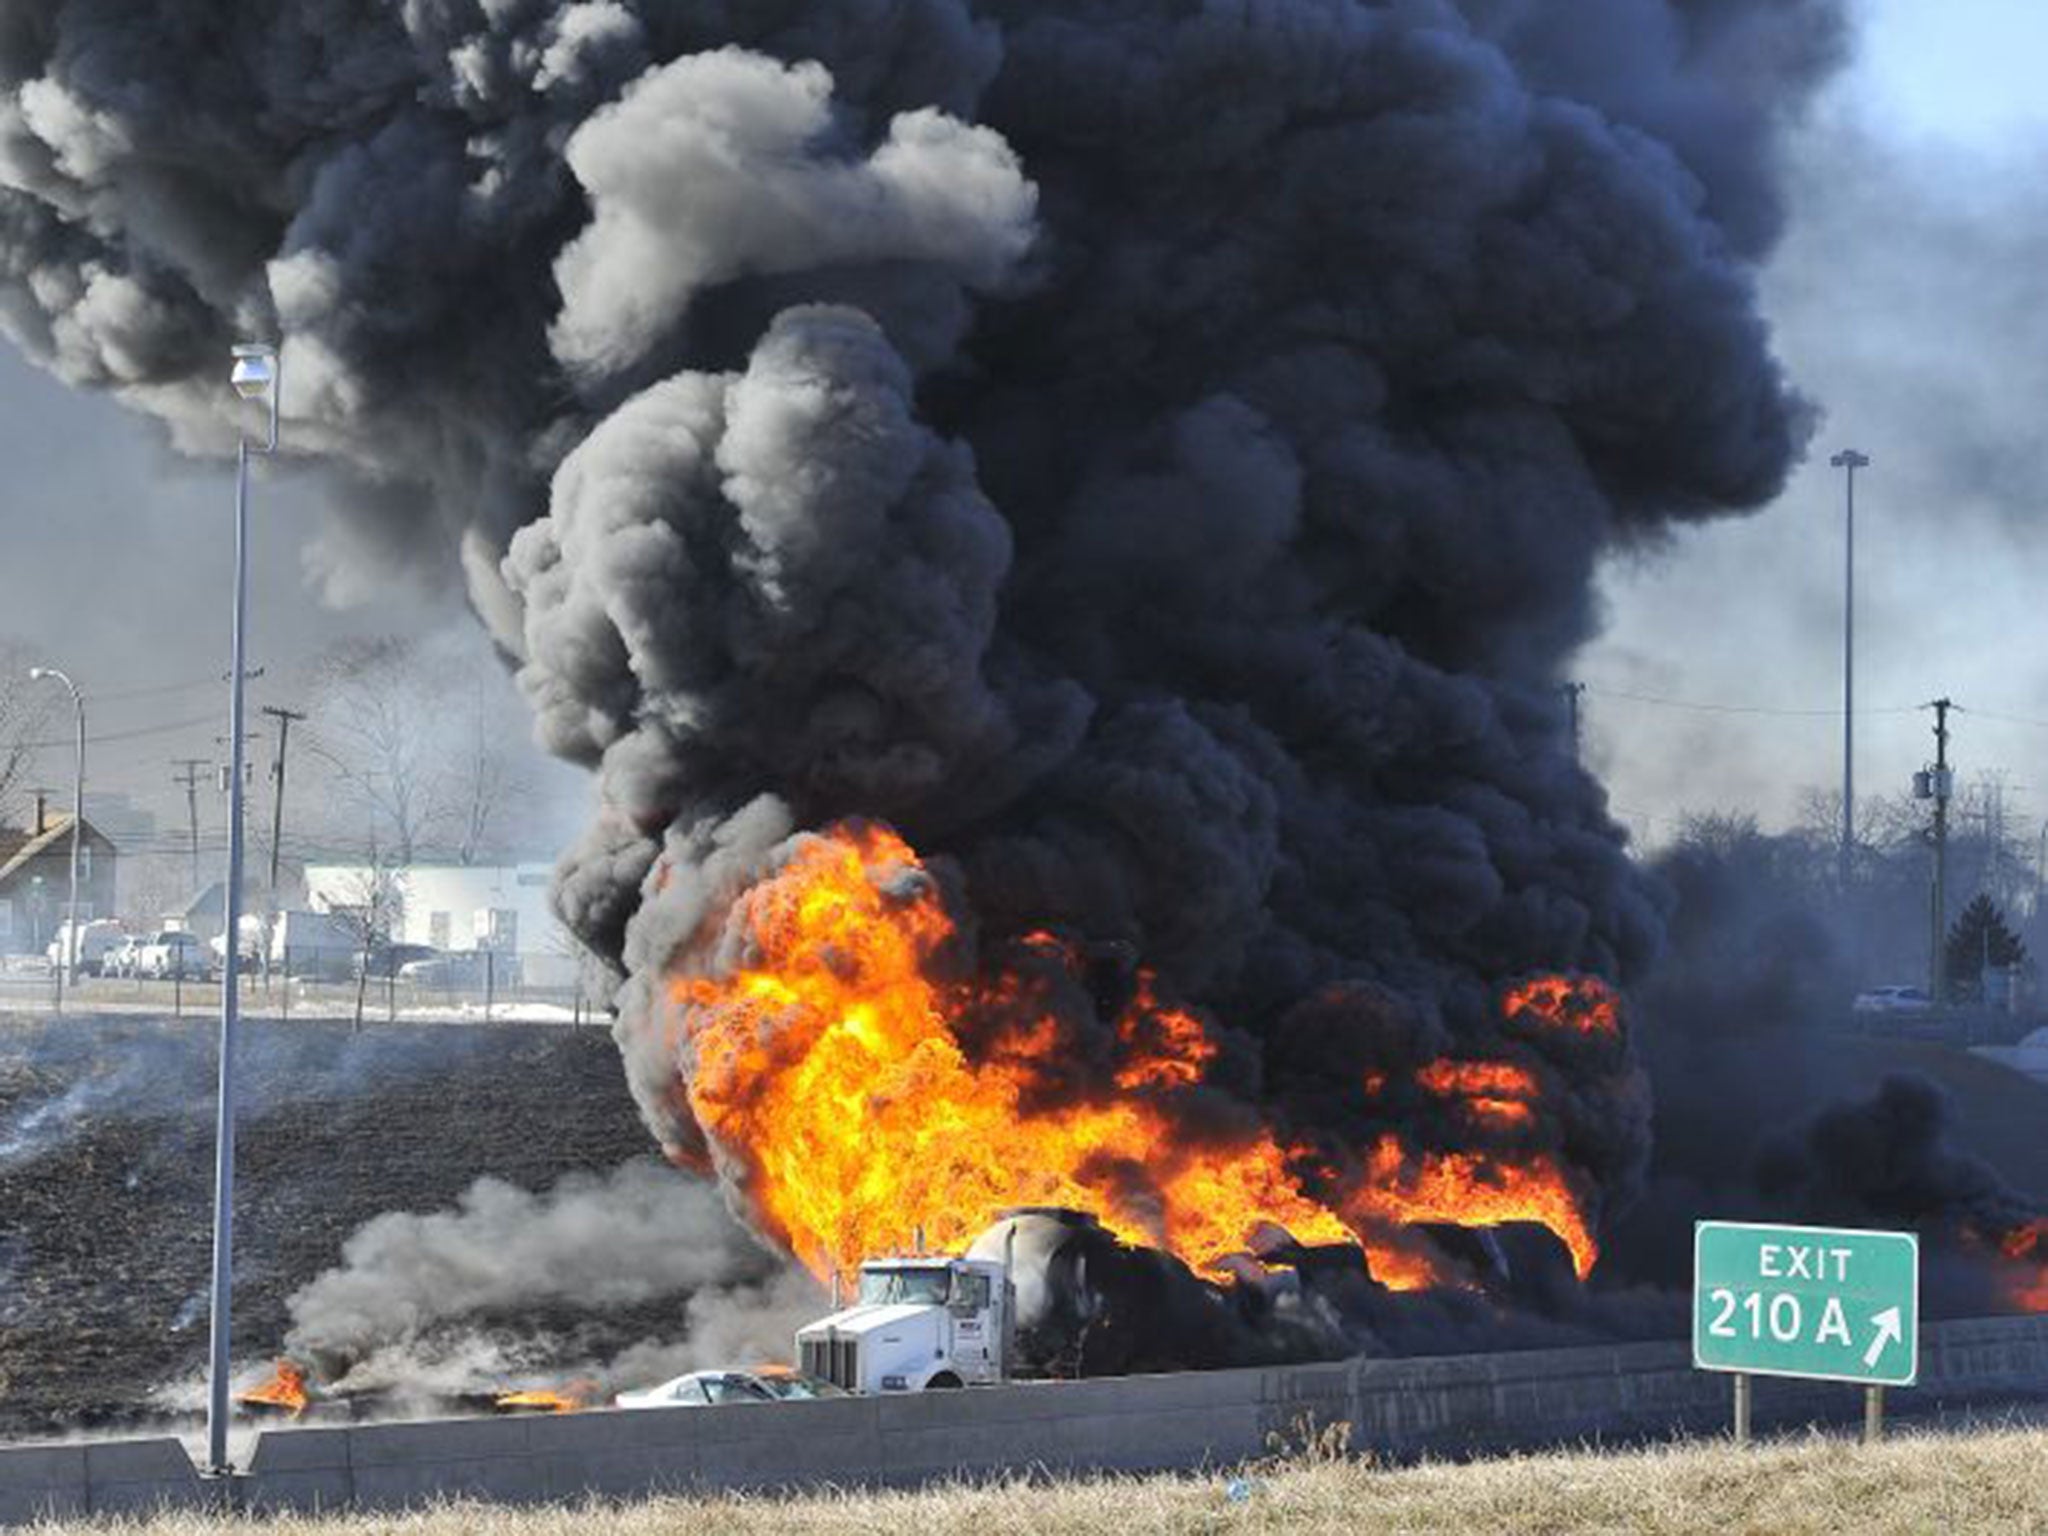 The tanker truck burns on Detroit's busy Interstate 54